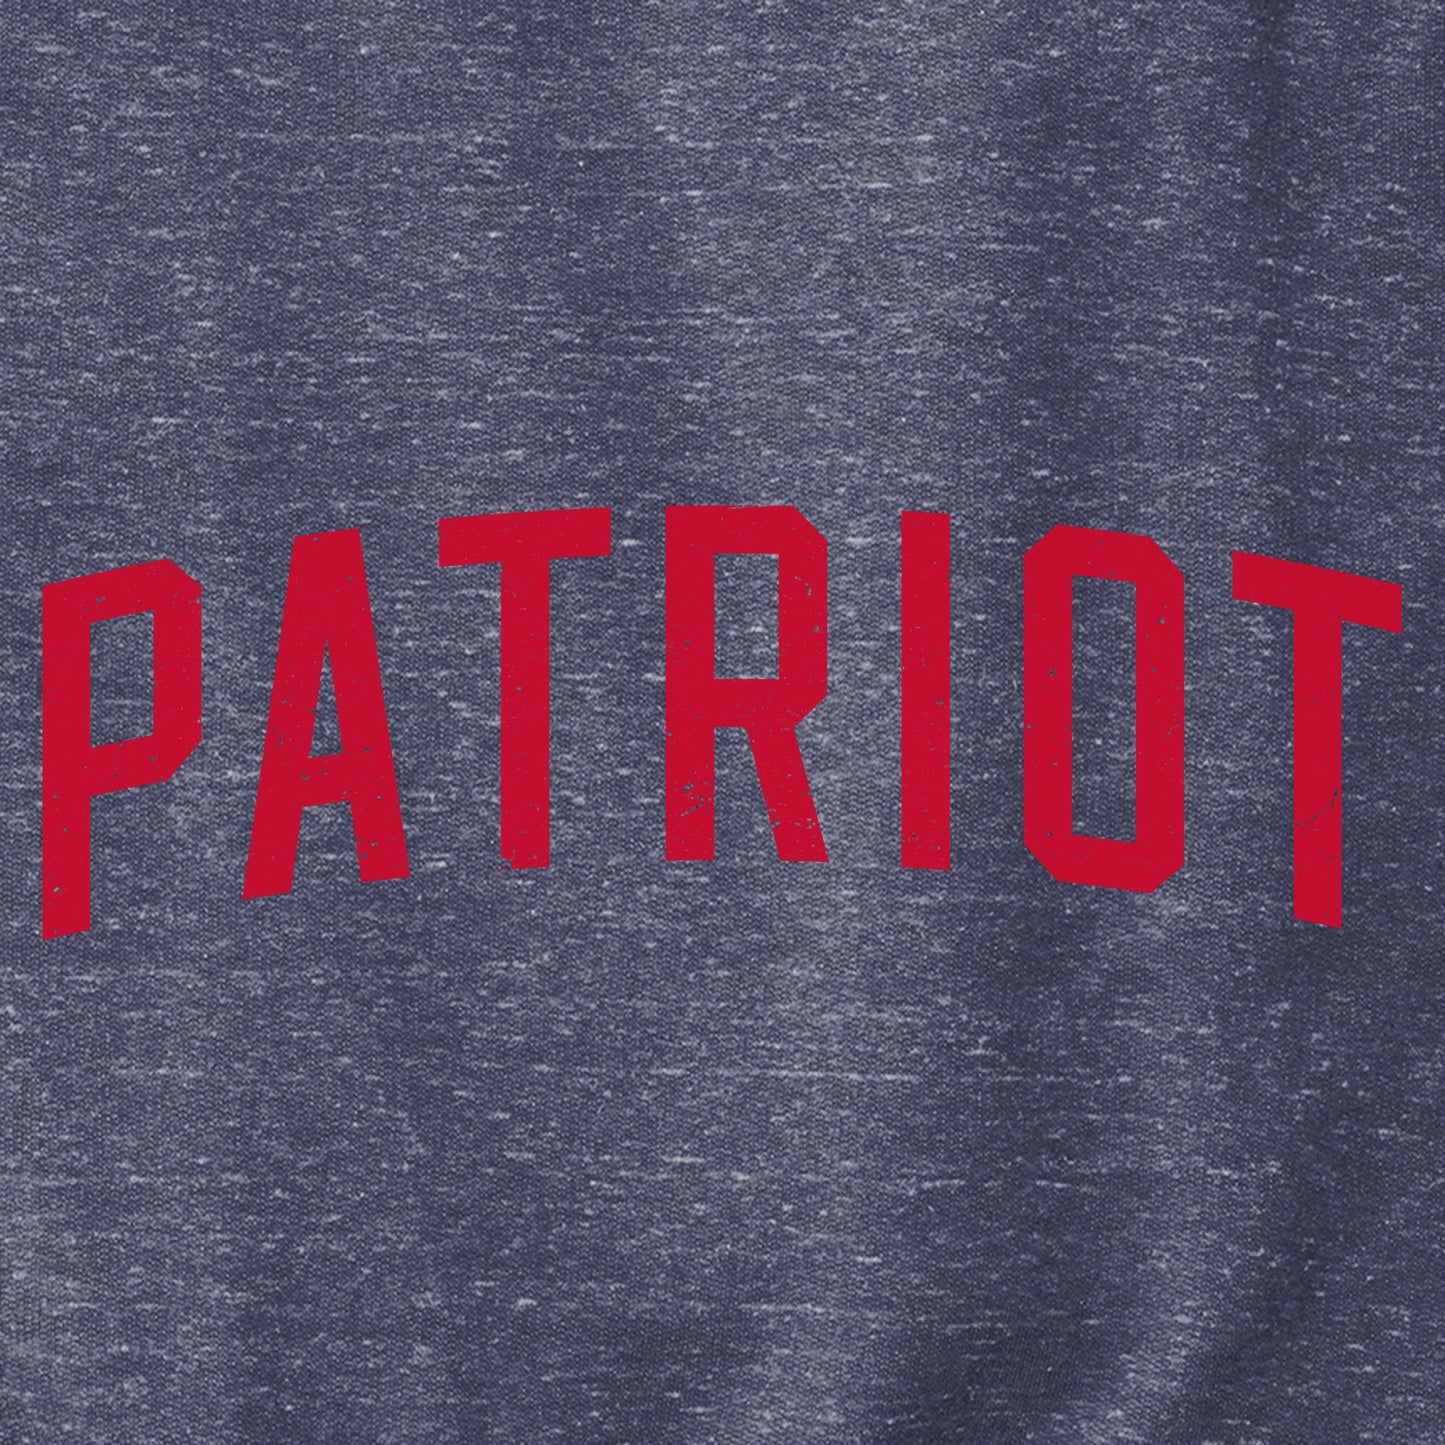 Zero F's Given Patriot Sweatshirt | Grunt Style